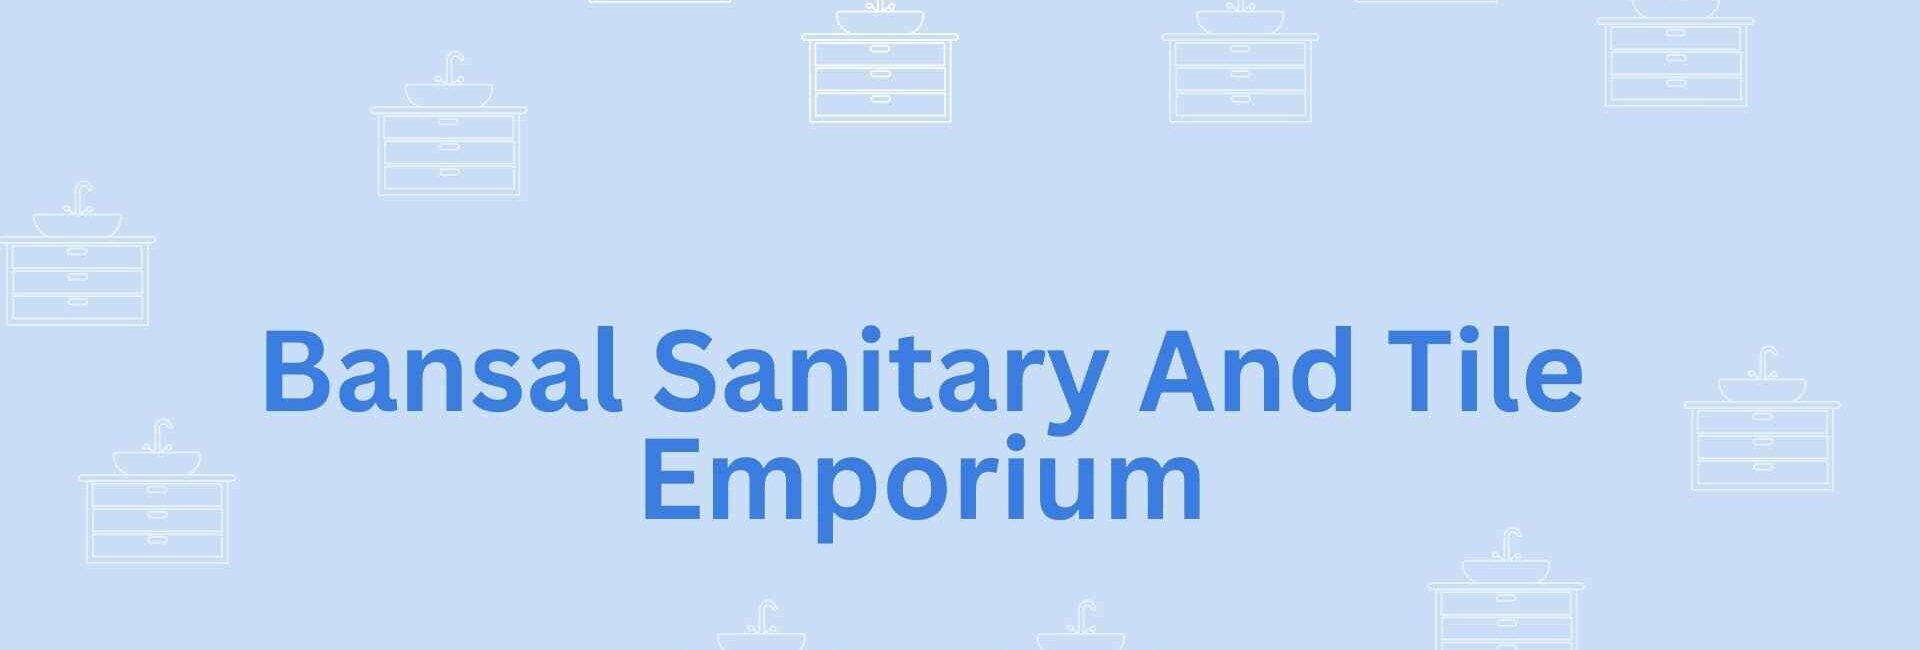 Bansal Sanitary And Tile Emporium- Sanitaryware company in Noida